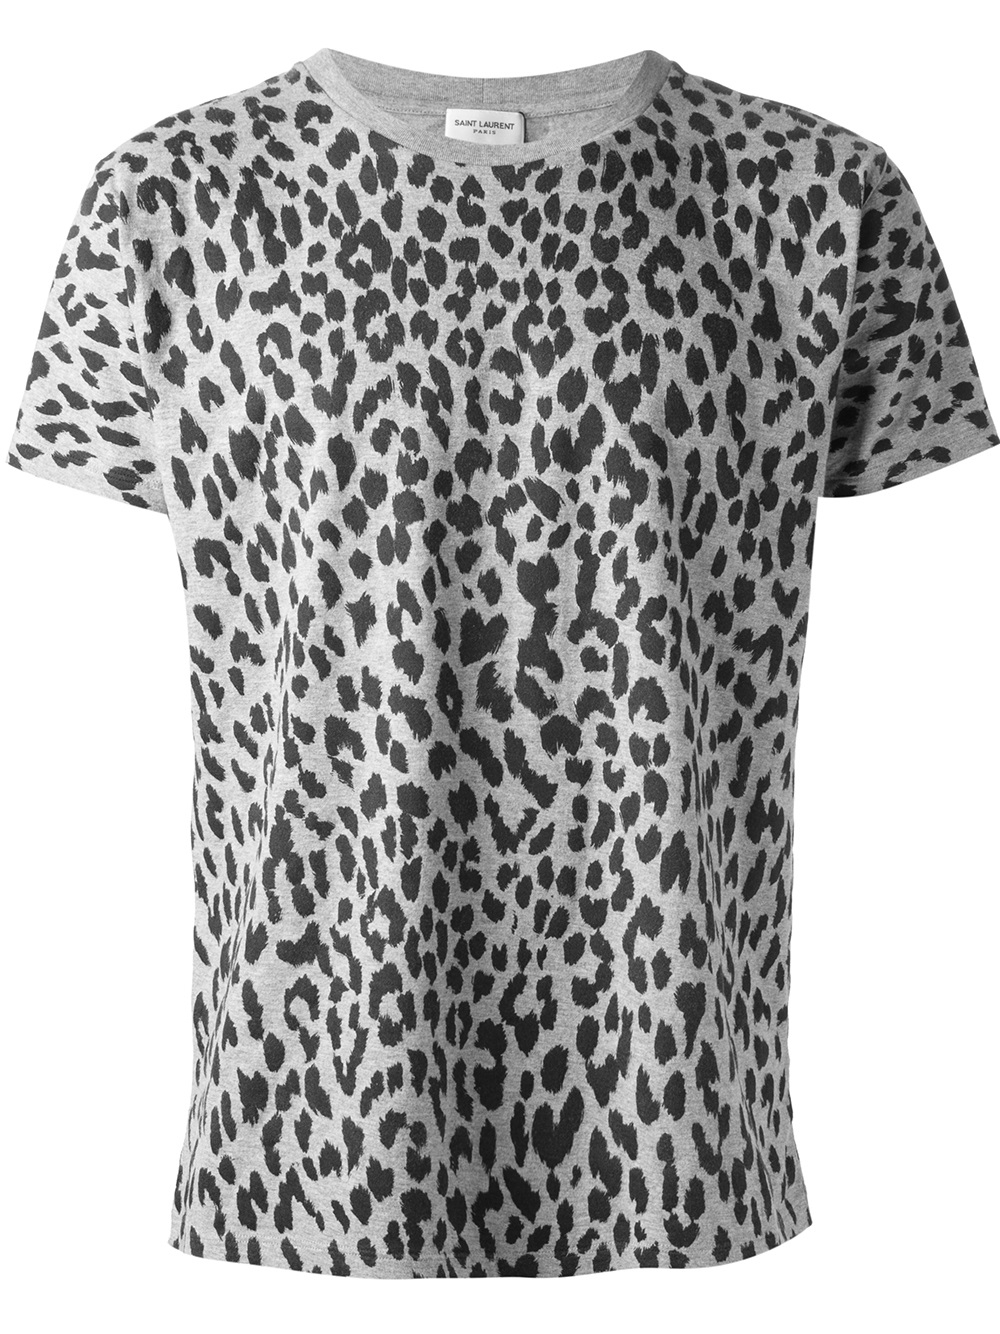 Lyst - Saint Laurent Leopard Print Tshirt in Gray for Men